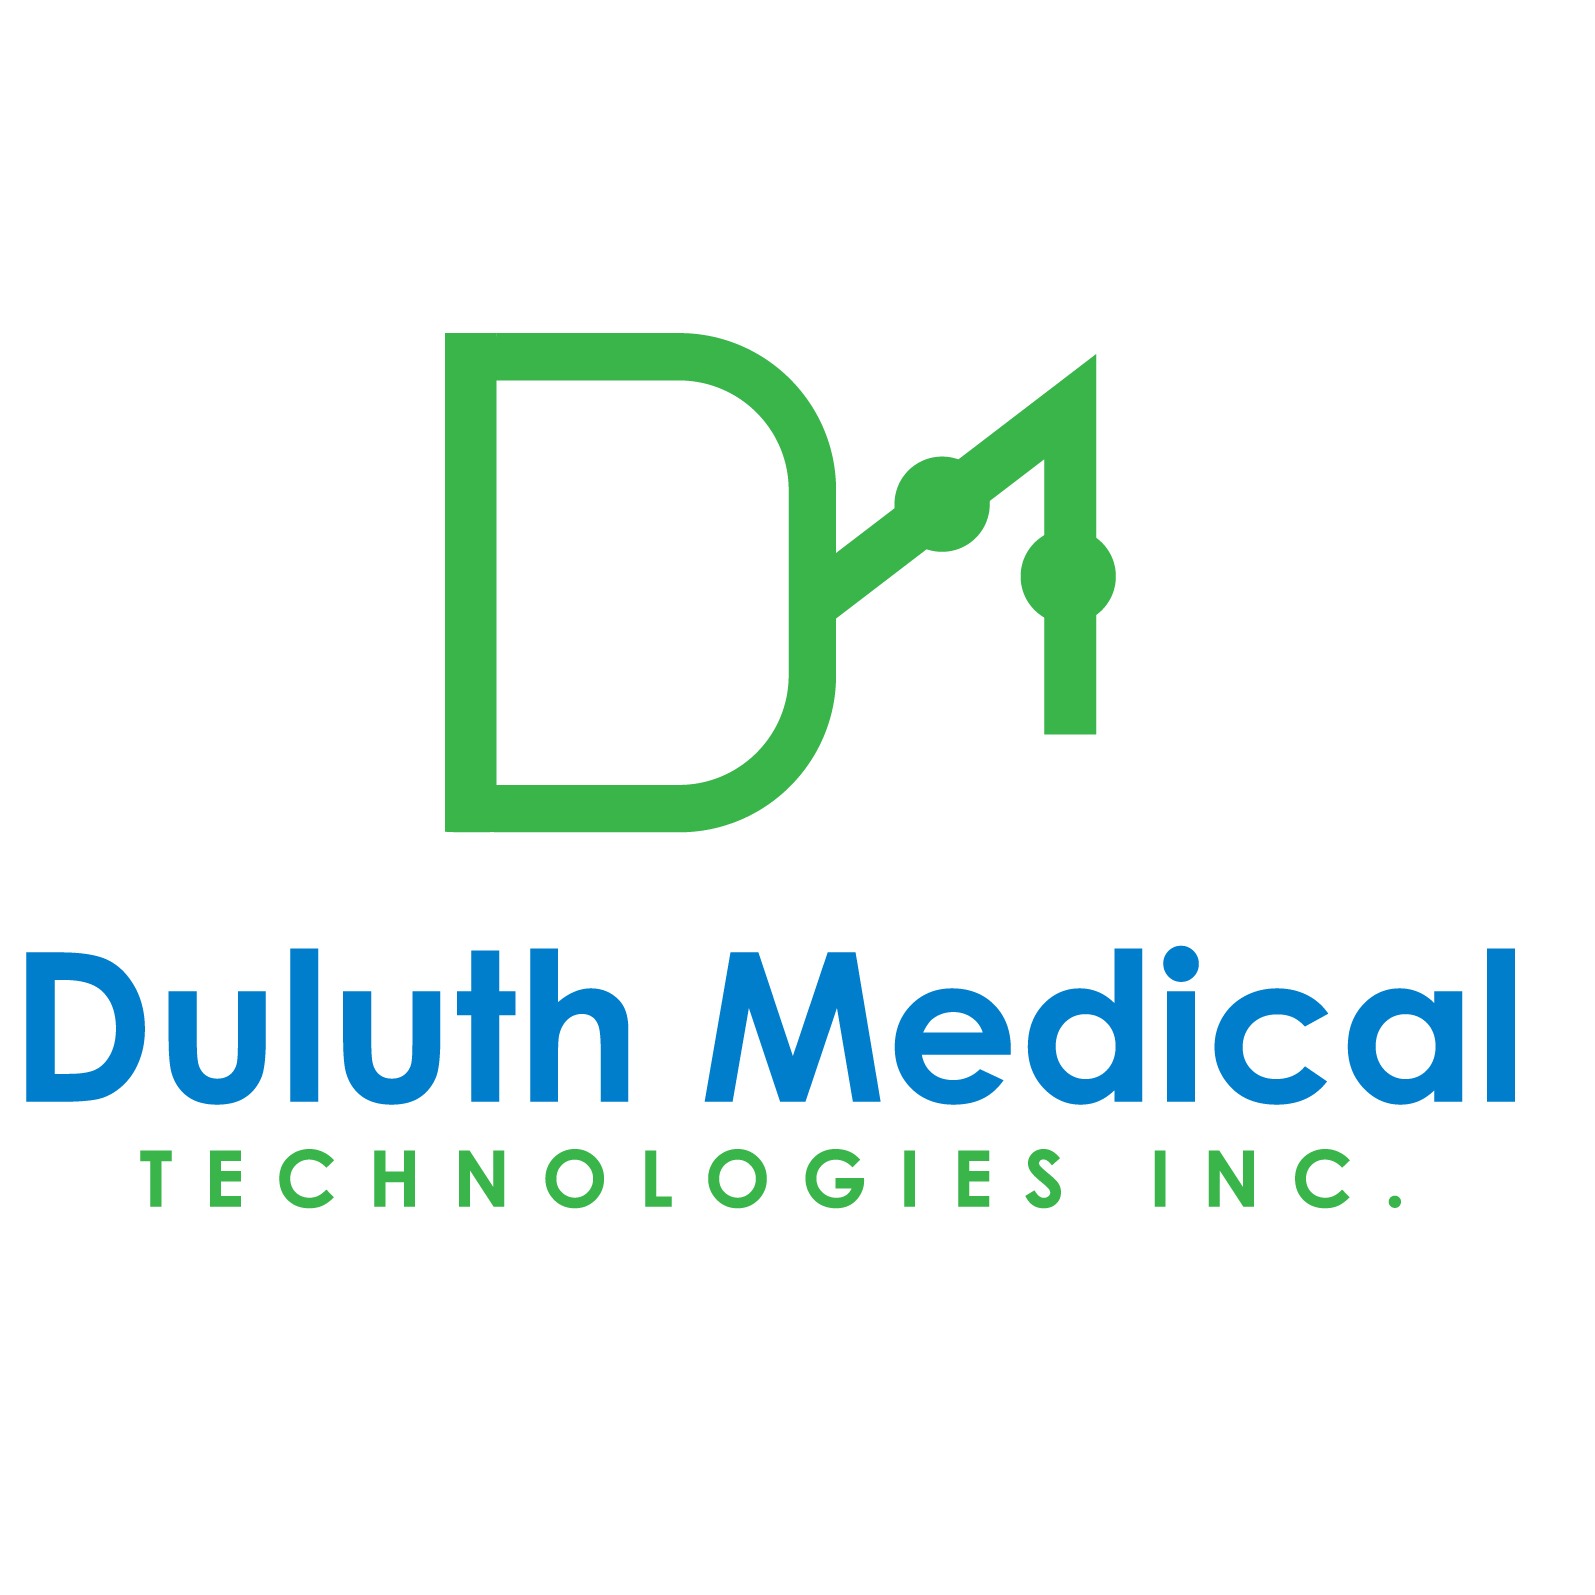 Duluth Medical Technologies Inc. 